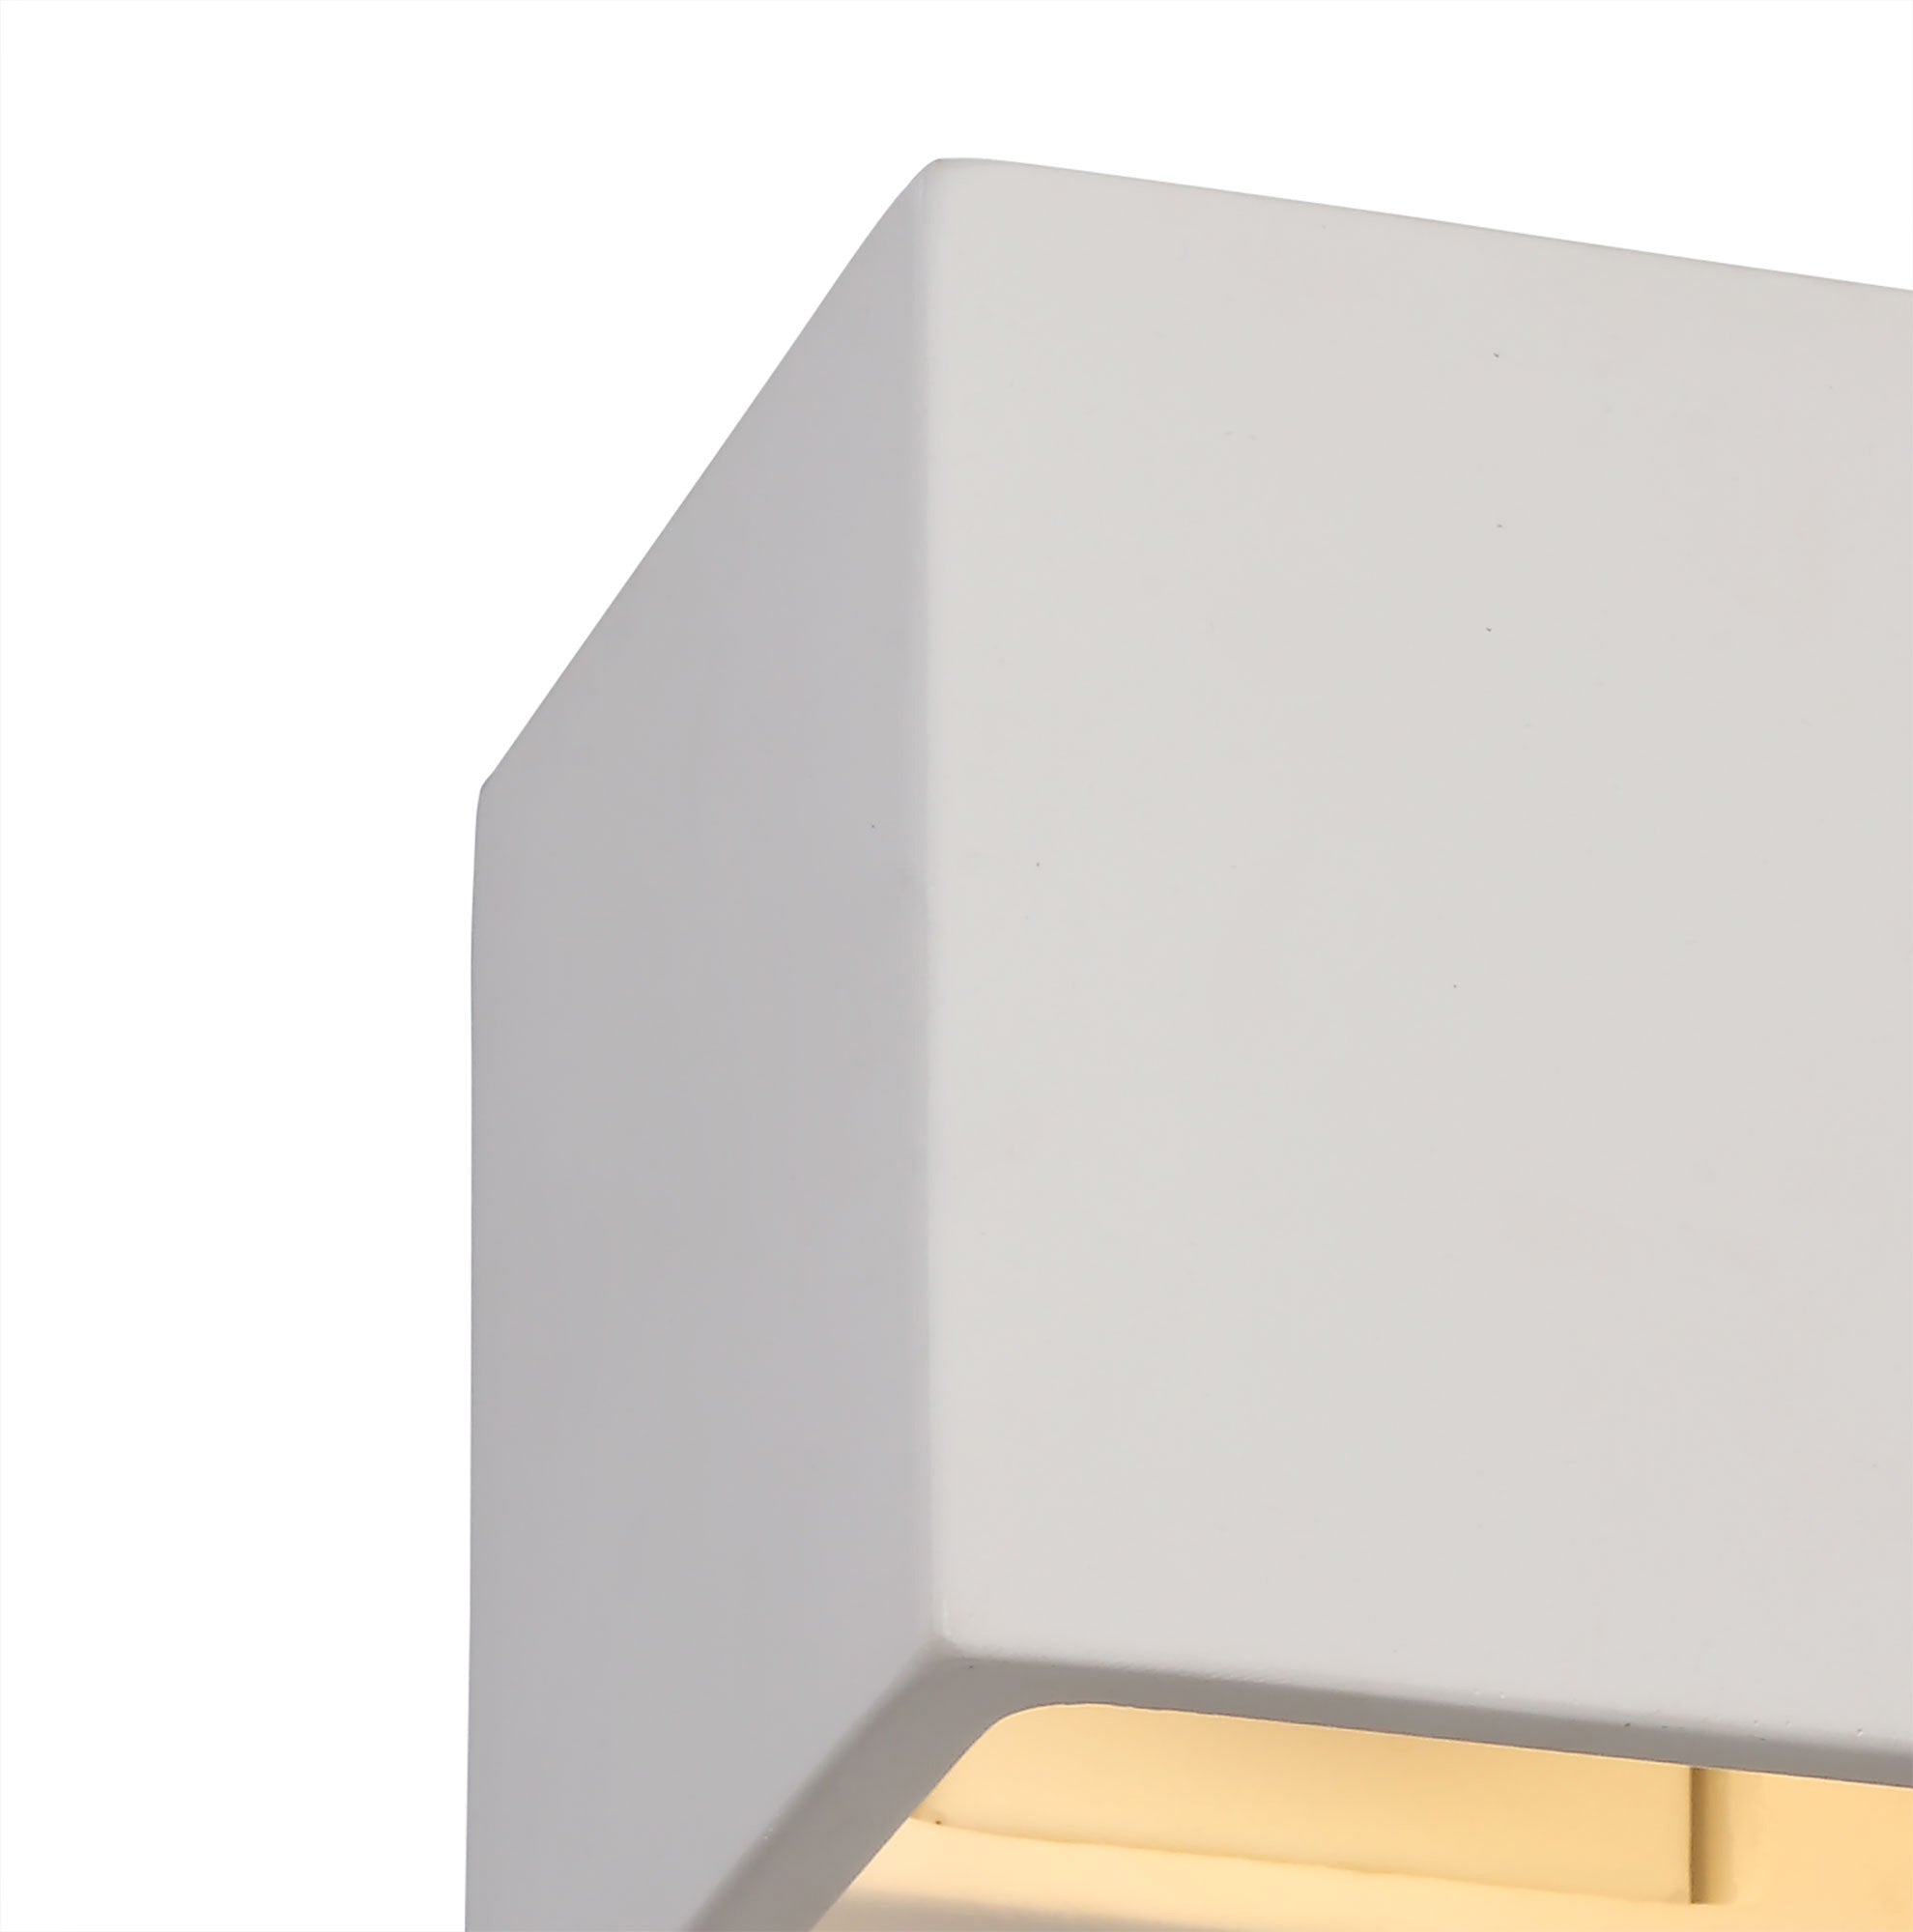 Alina Square Wall Lamp, 1 x G9, White Paintable Gypsum